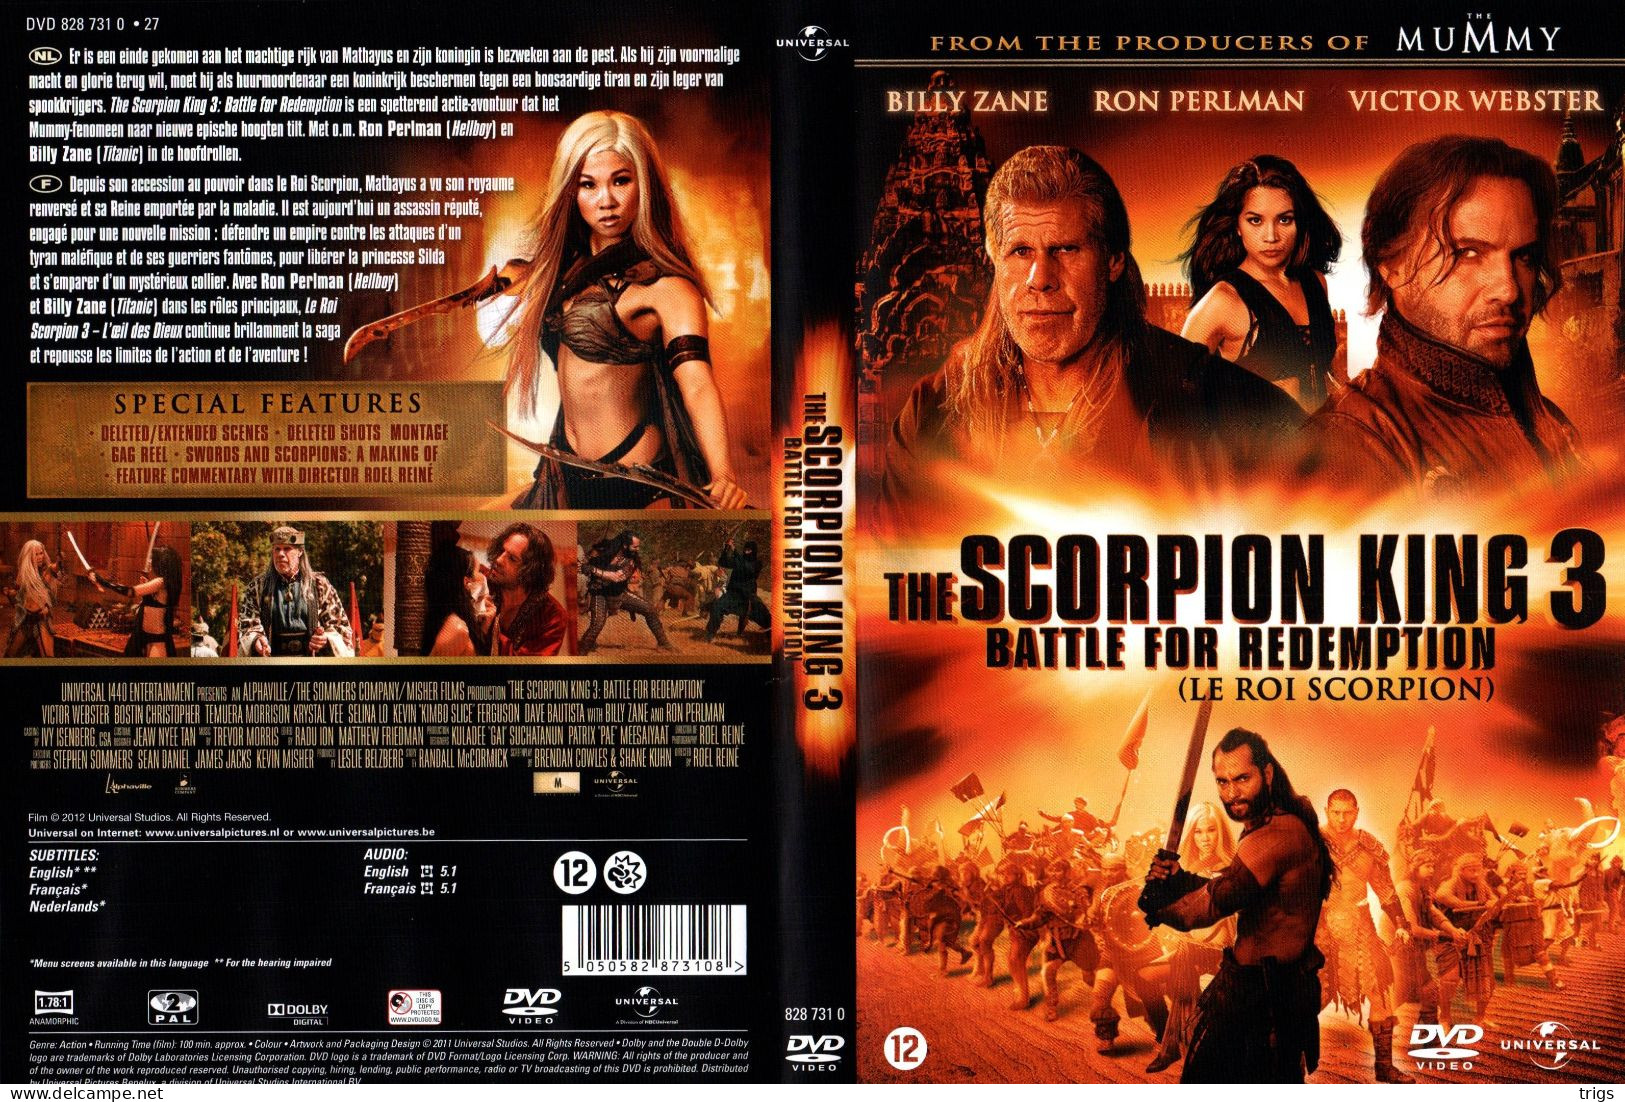 DVD - The Scorpion King 3: Battle For Redemption - Acción, Aventura